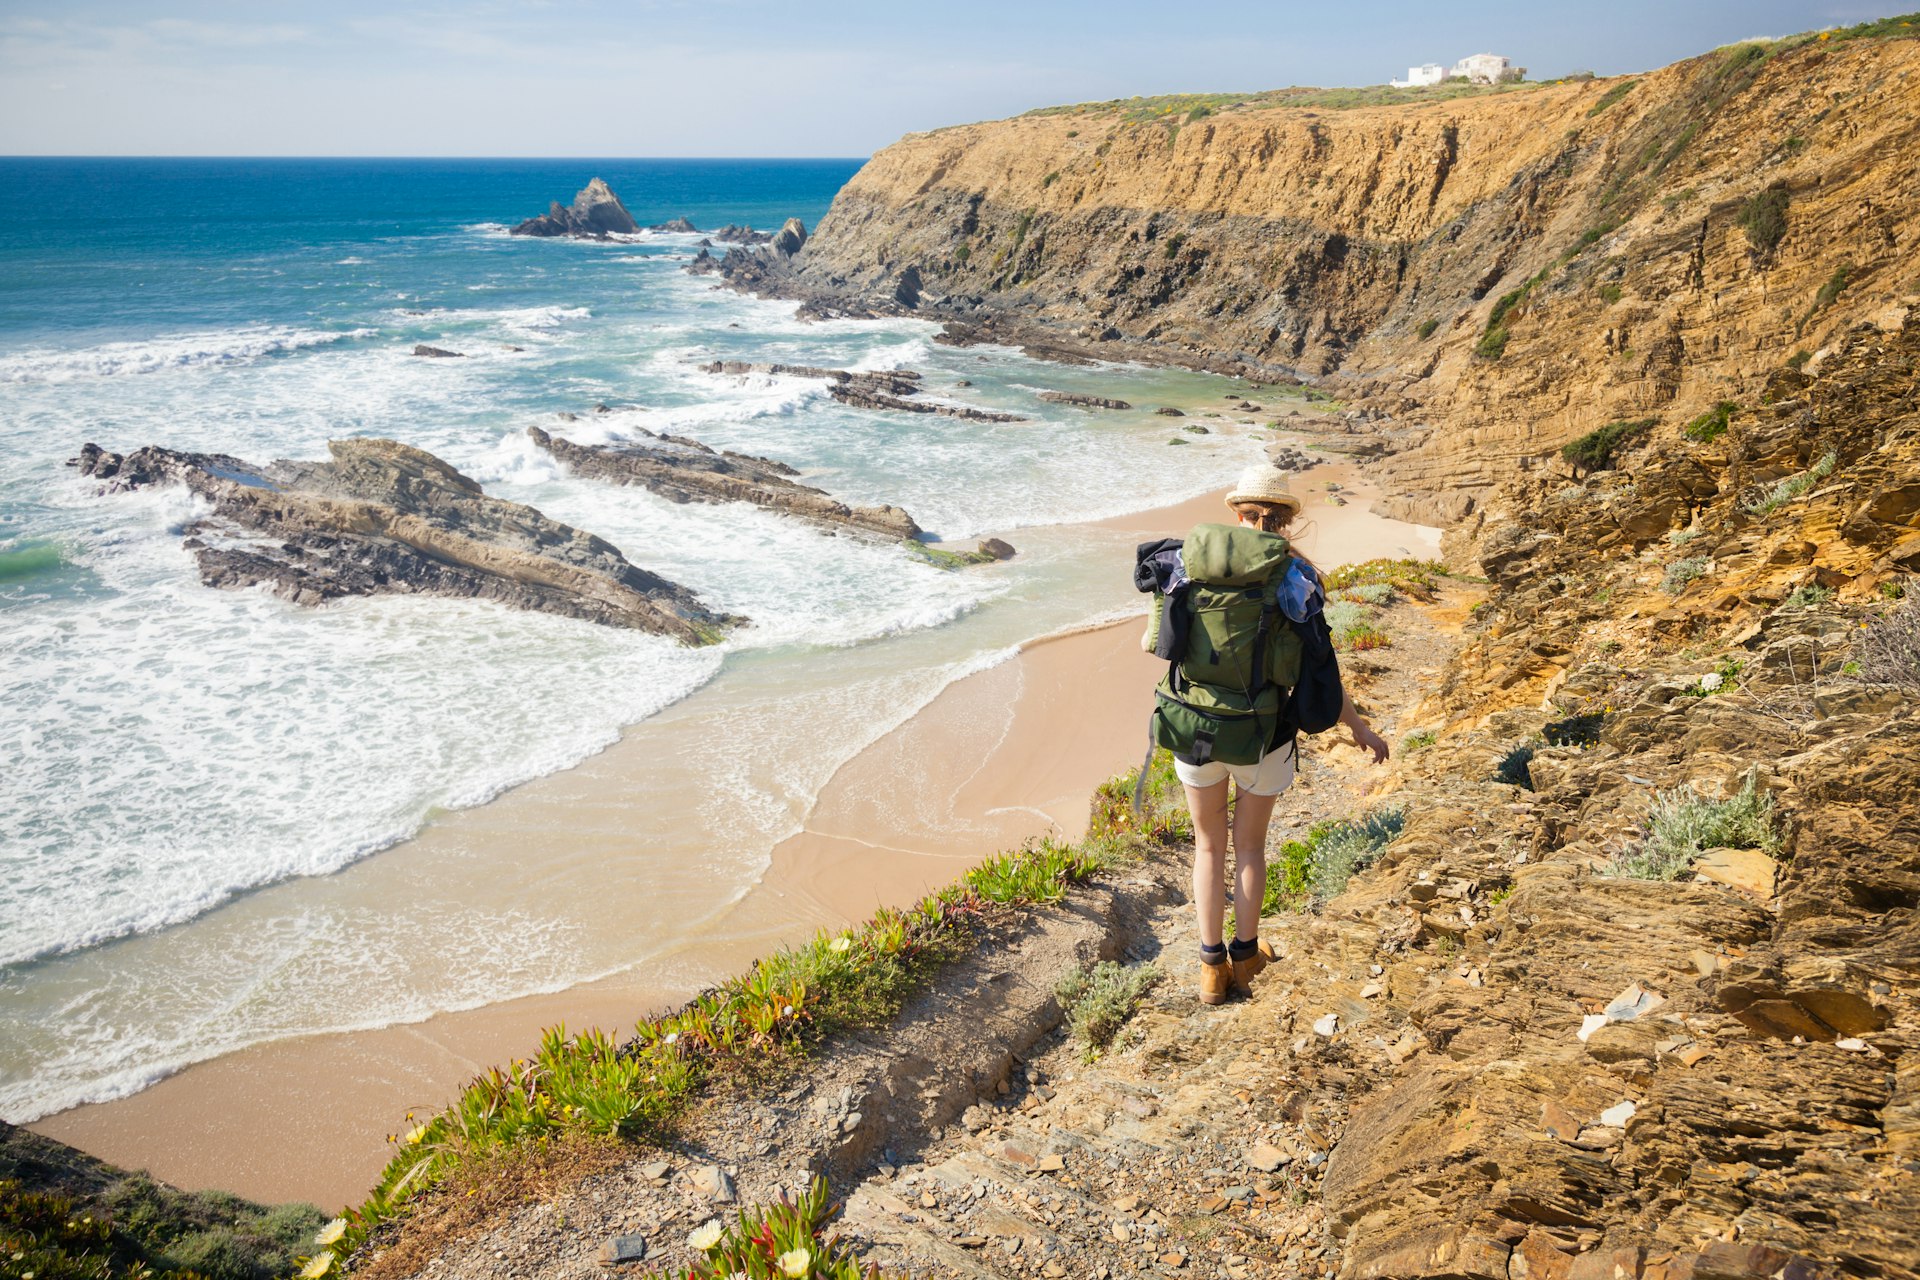 A female hiker walking along cliffs above an empty beach in the Algarve, Portugal